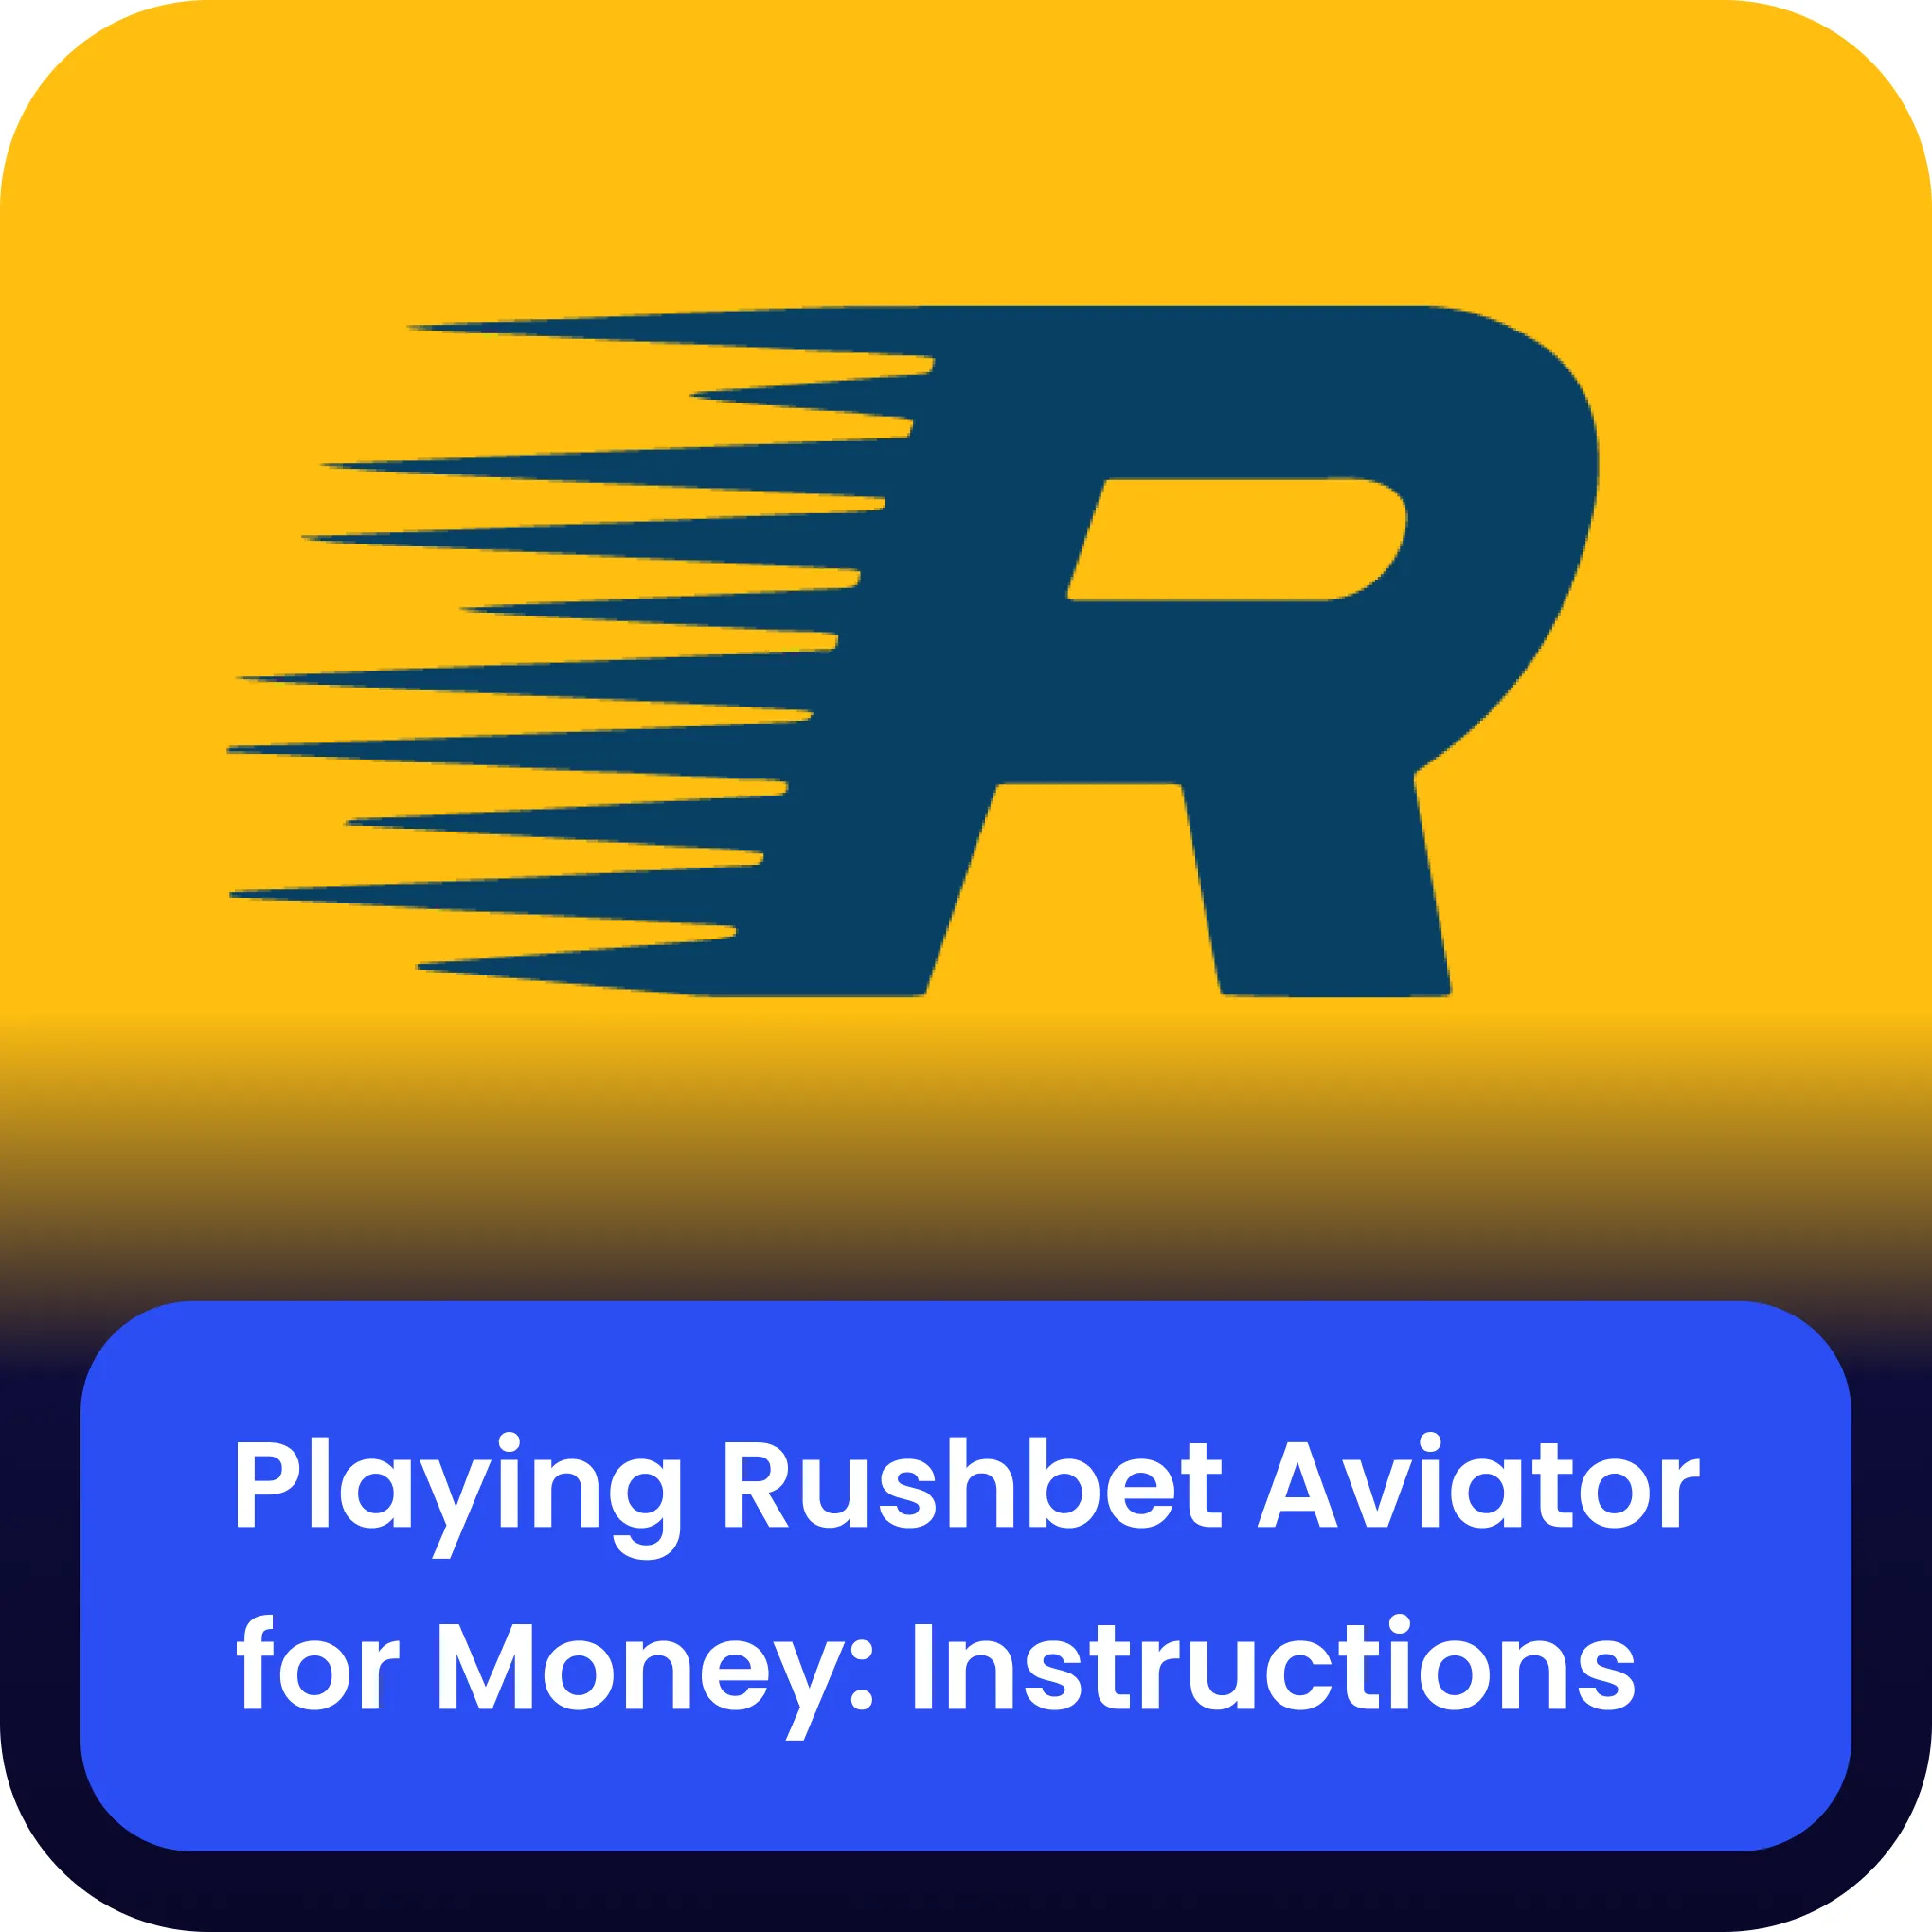 rushbet aviator play for money